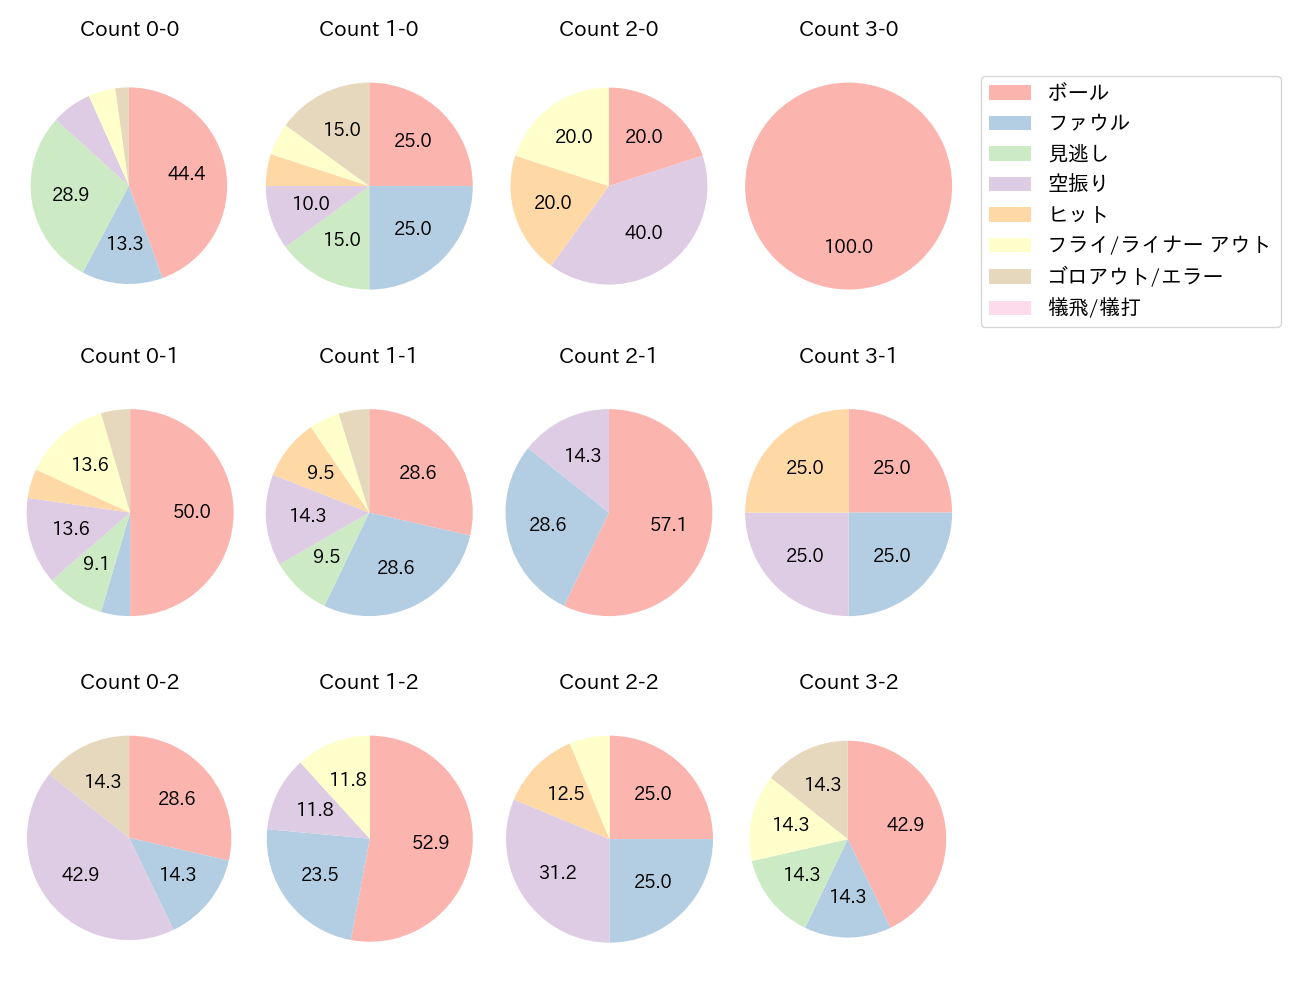 T-岡田の球数分布(2021年7月)